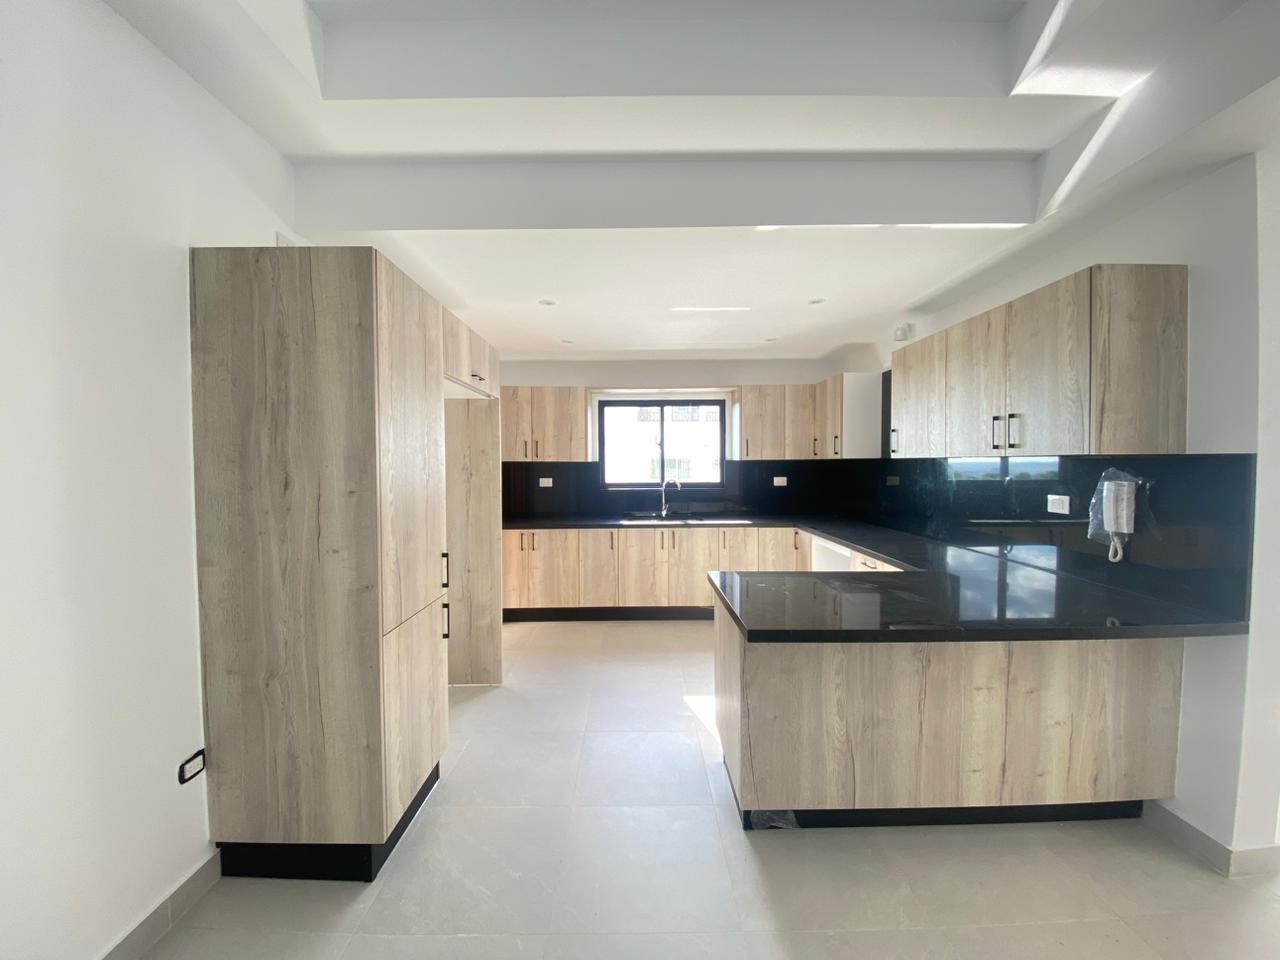 penthouses - Pent-house Nuevo en VentaMIRADOR SUR Mantenimiento: RD$12,000. 3